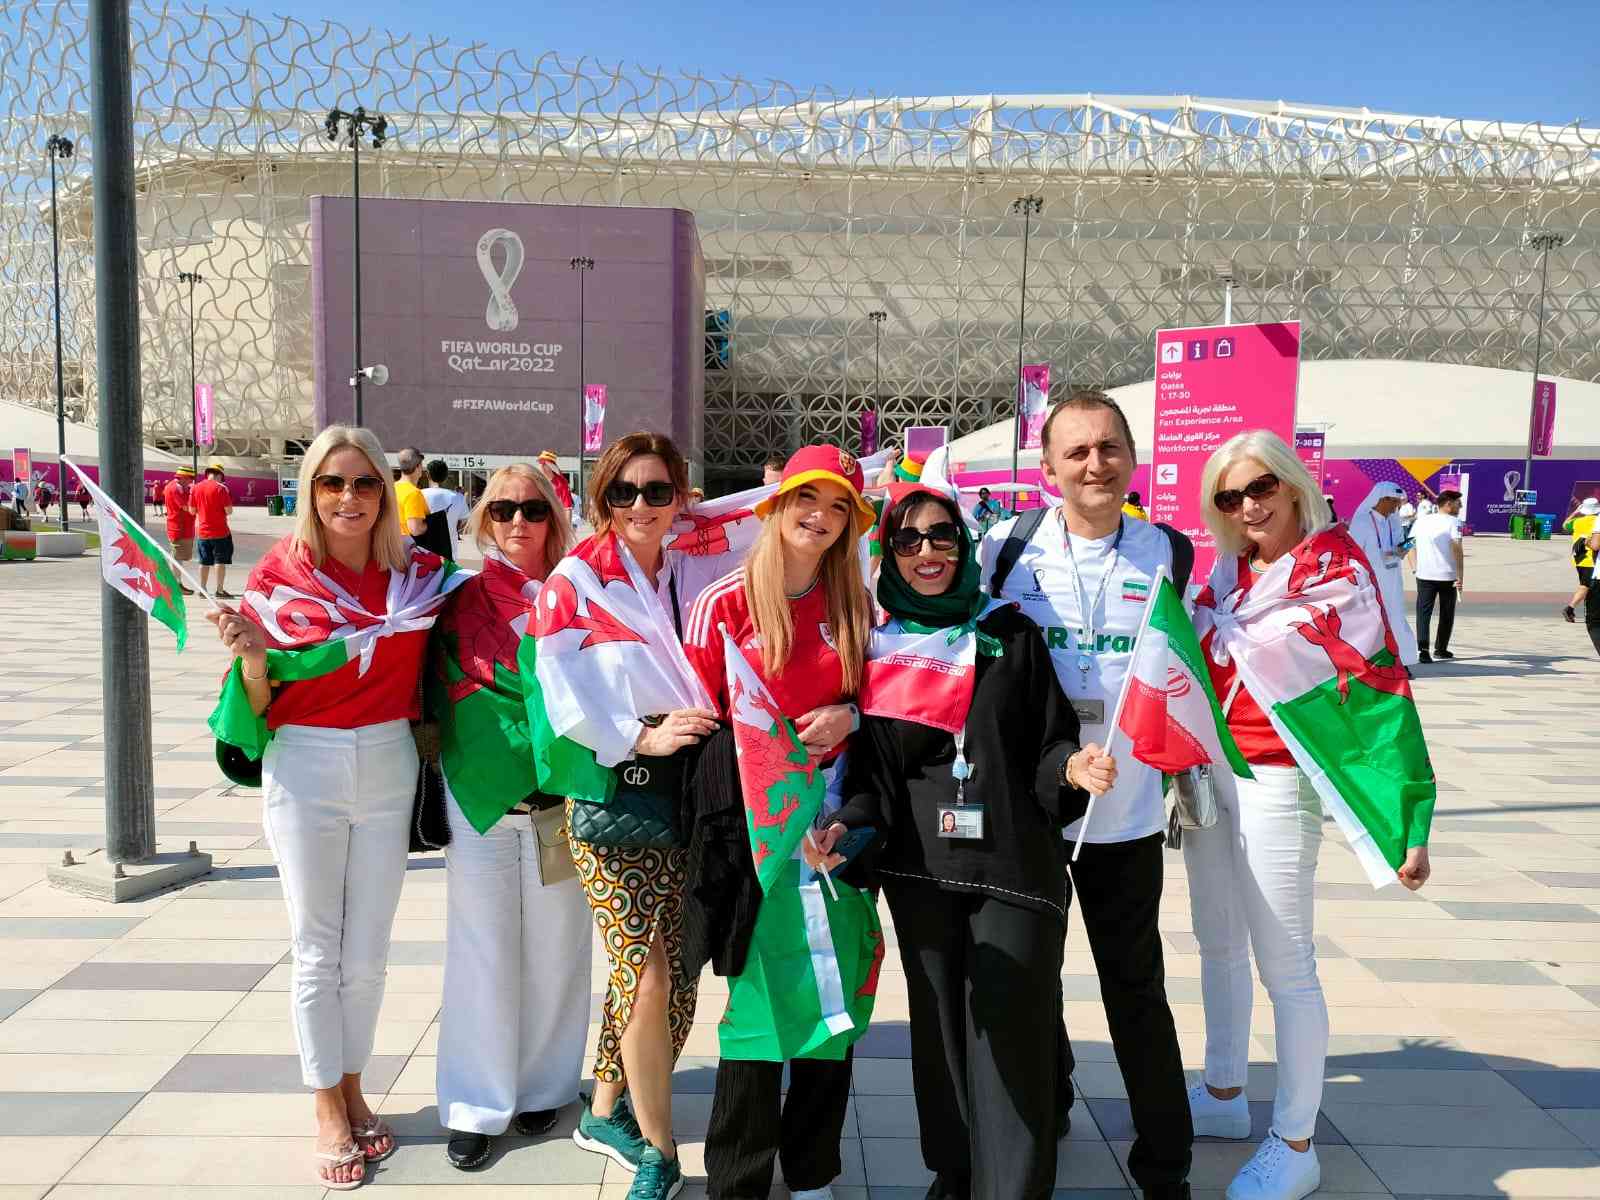 yuk-intip-fashion-suporter-wanita-di-piala-dunia-qatar-2022